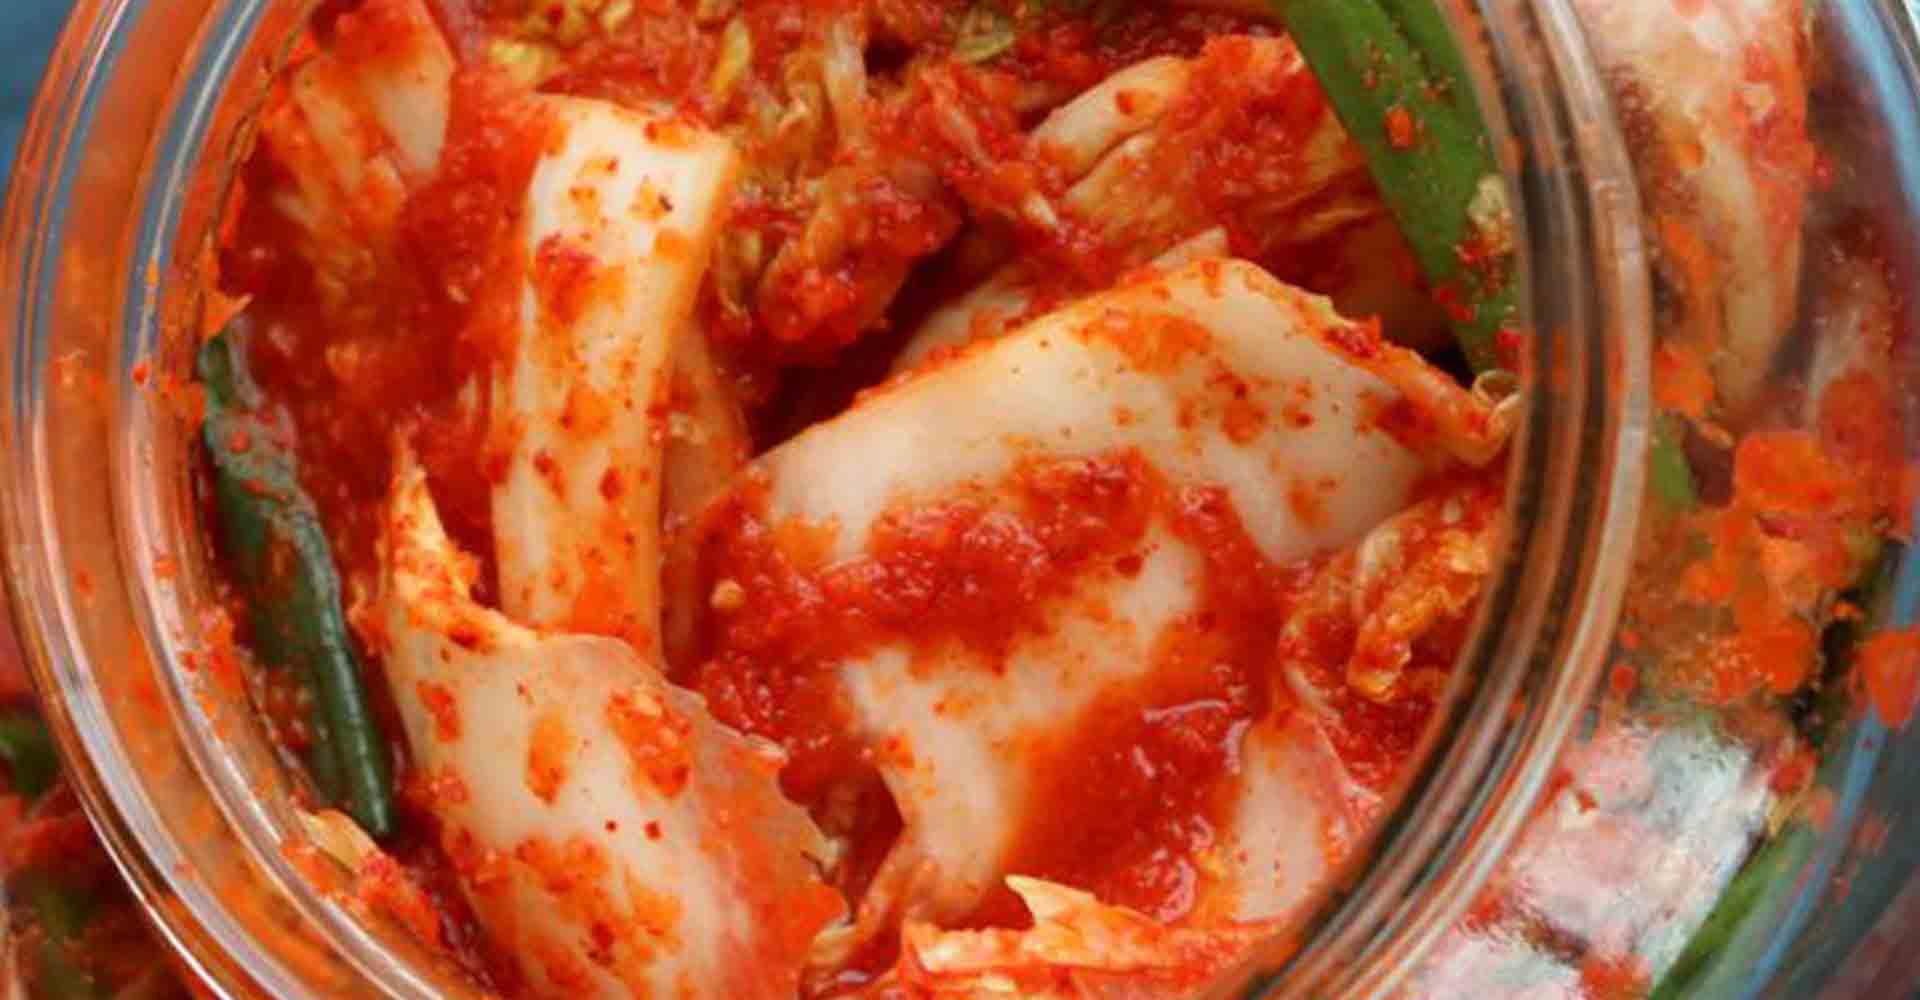 kimchi recipe easy fermentation simple recipes make meghantelpner telpner meghan